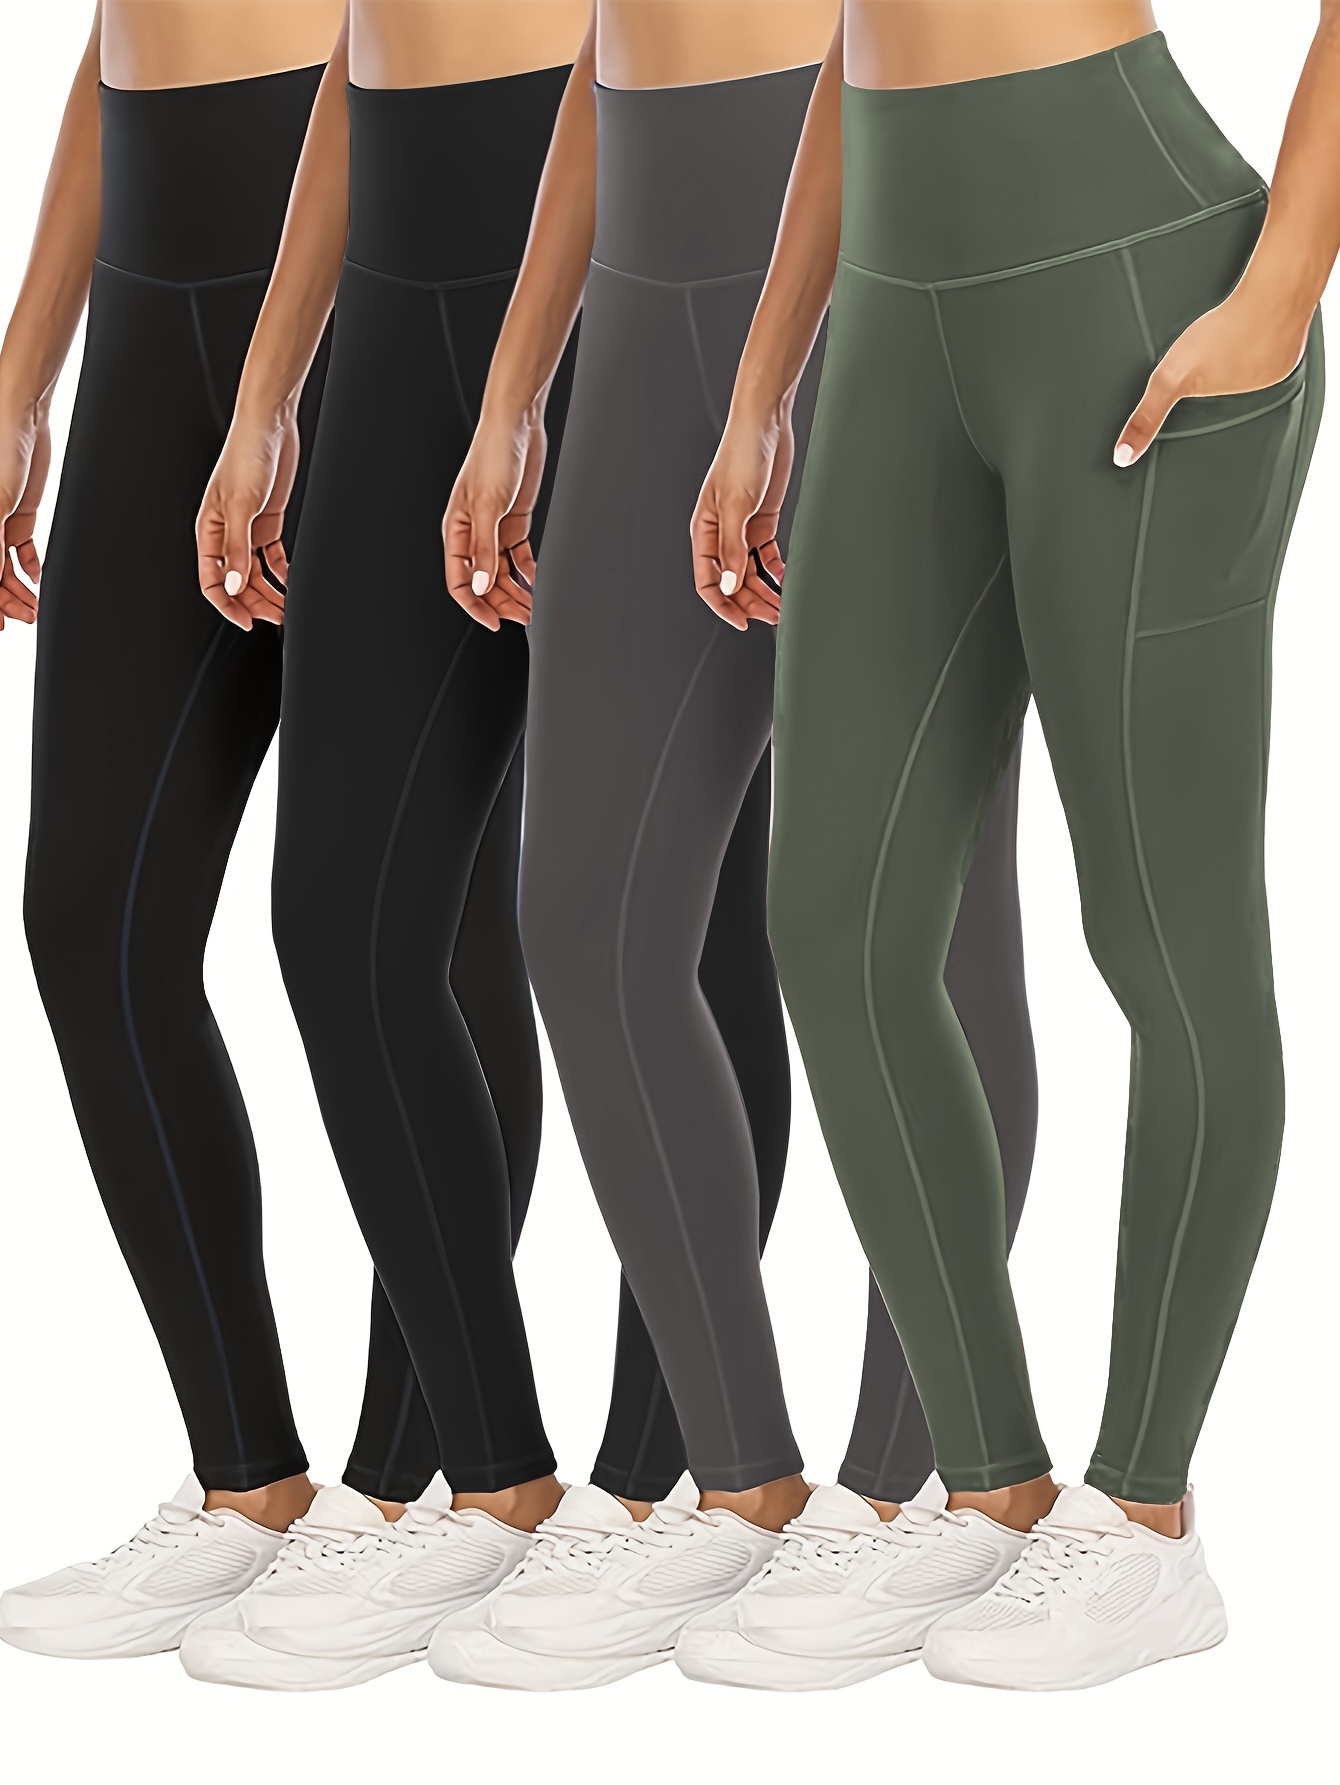 Lululemon Speed Tight Women's Dark Green Compression Leggings Pockets Size 6